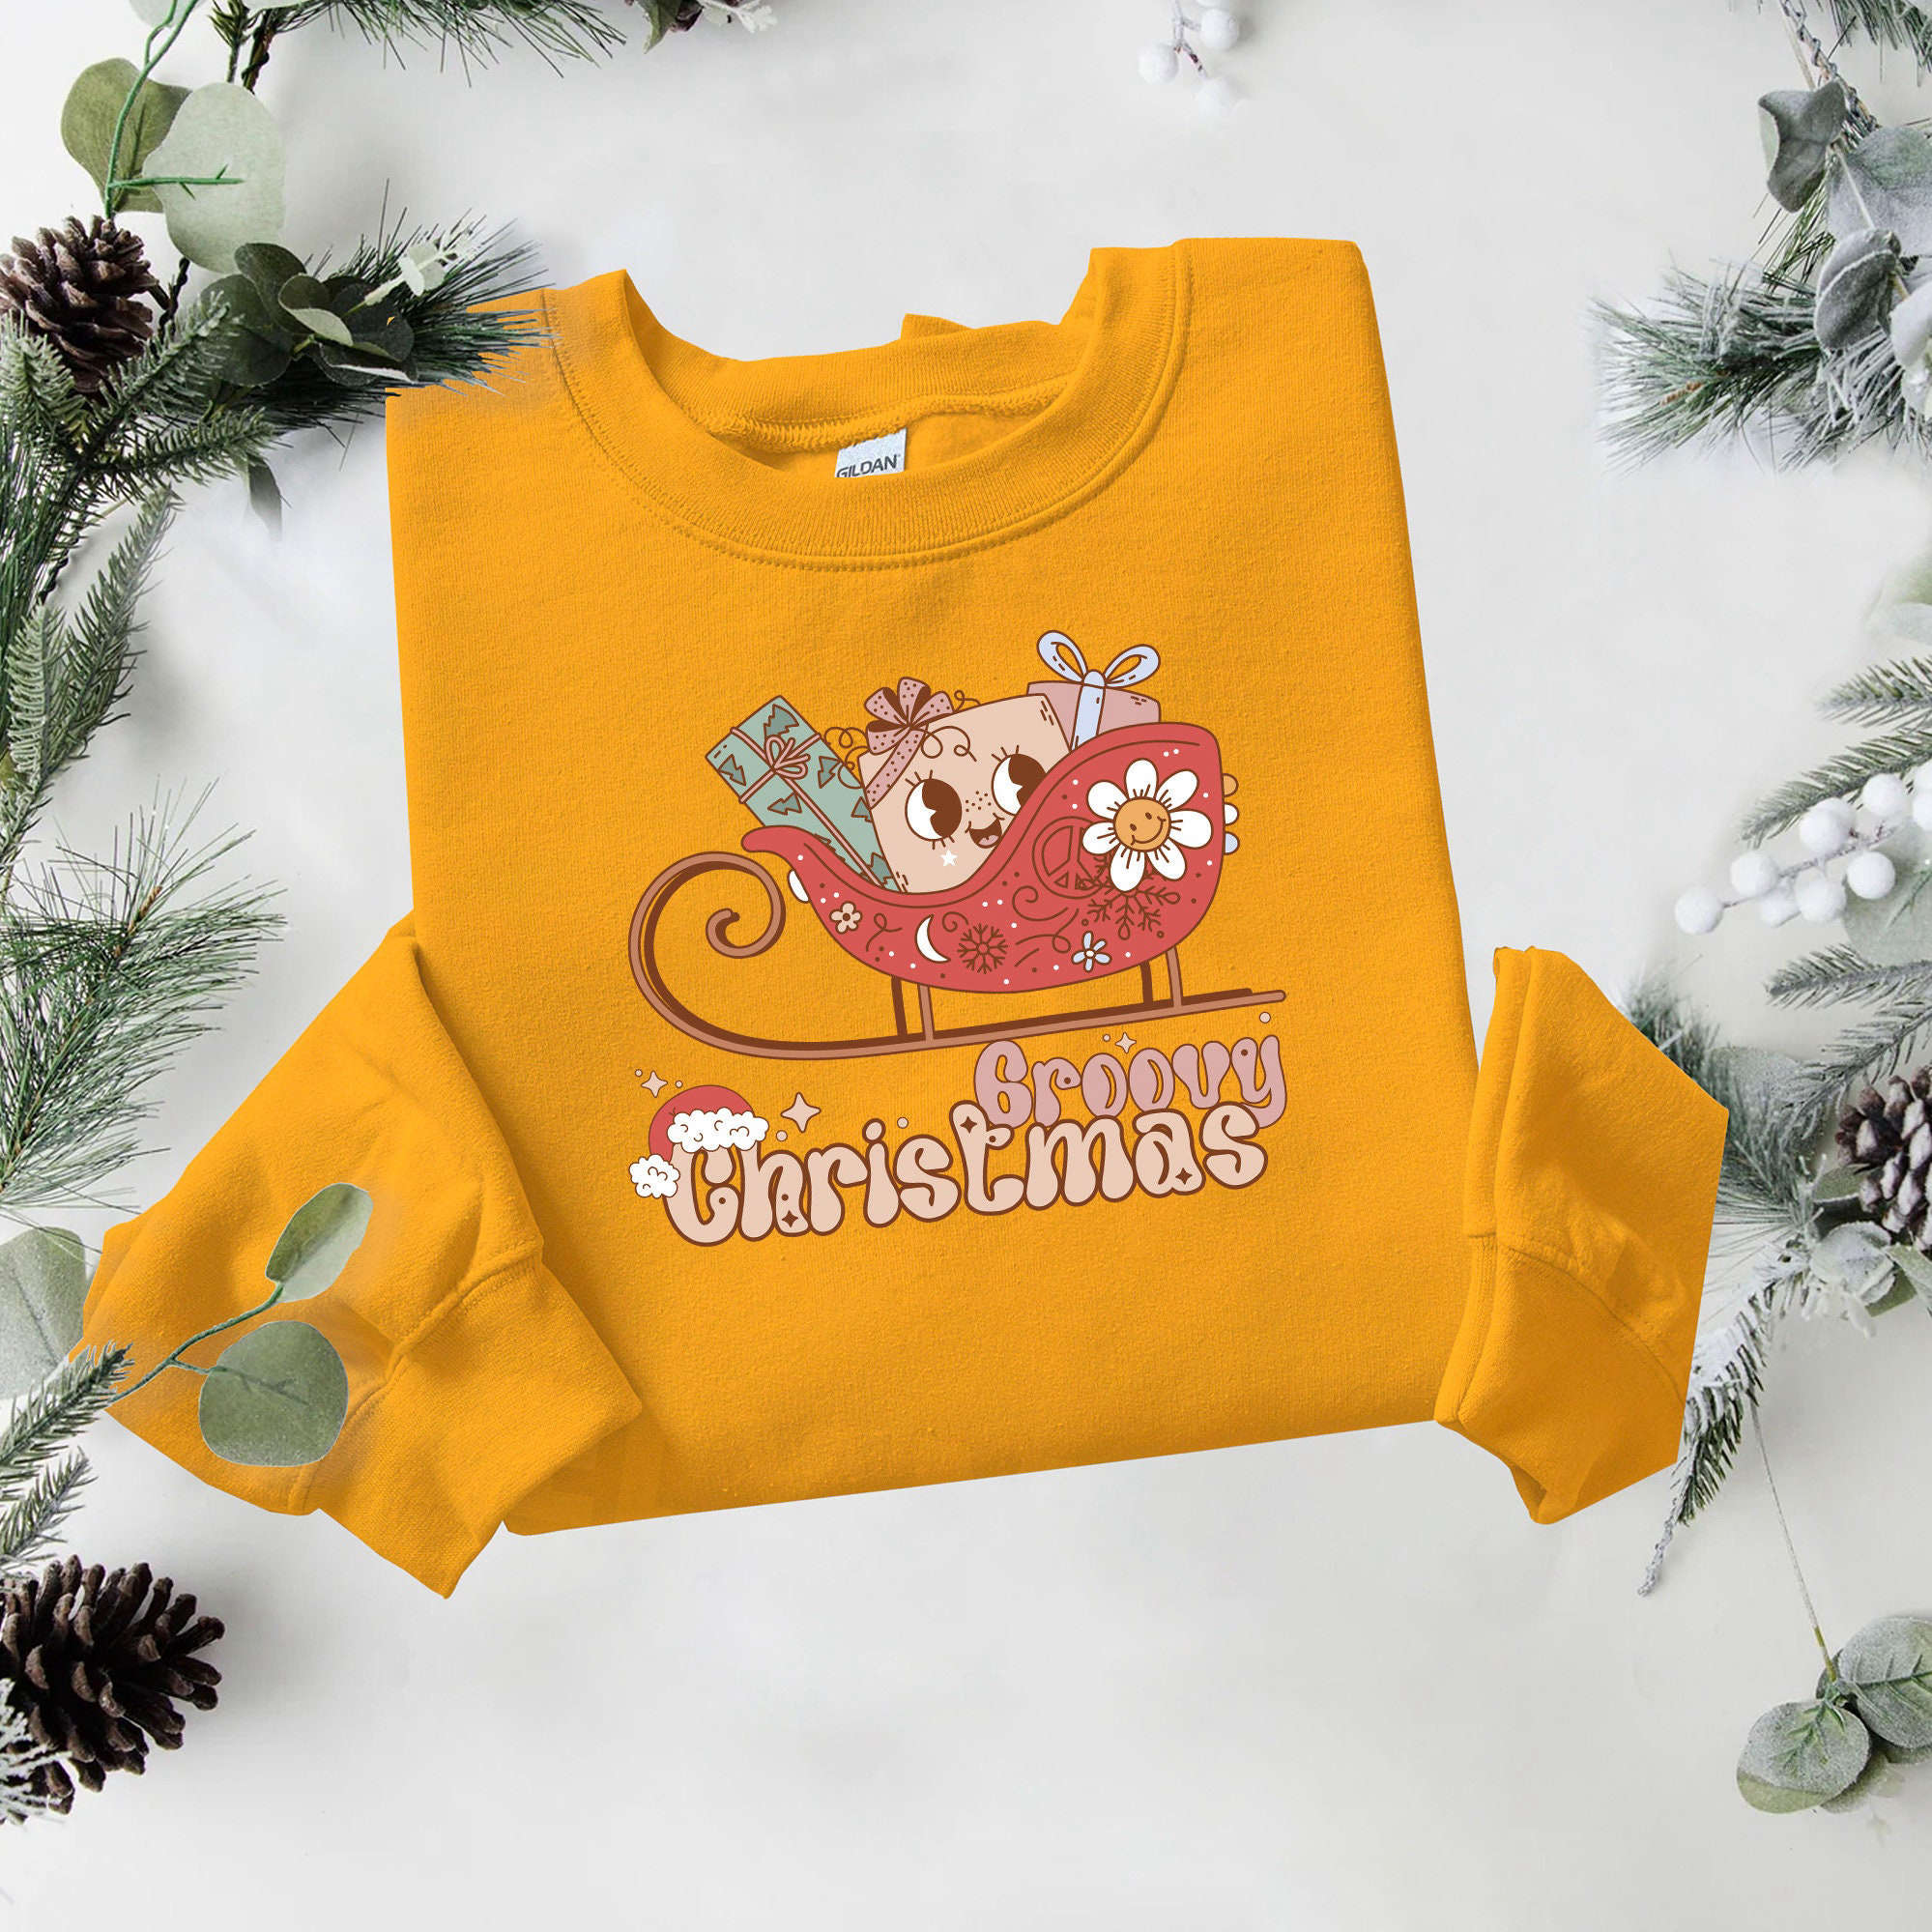 Groovy Christmas Shirt, Christmas Sweatshirt, Womens Christmas Shirt, Christmas Gift, Christmas Sweater, Holiday Retro Sw eatshirt, Vintage